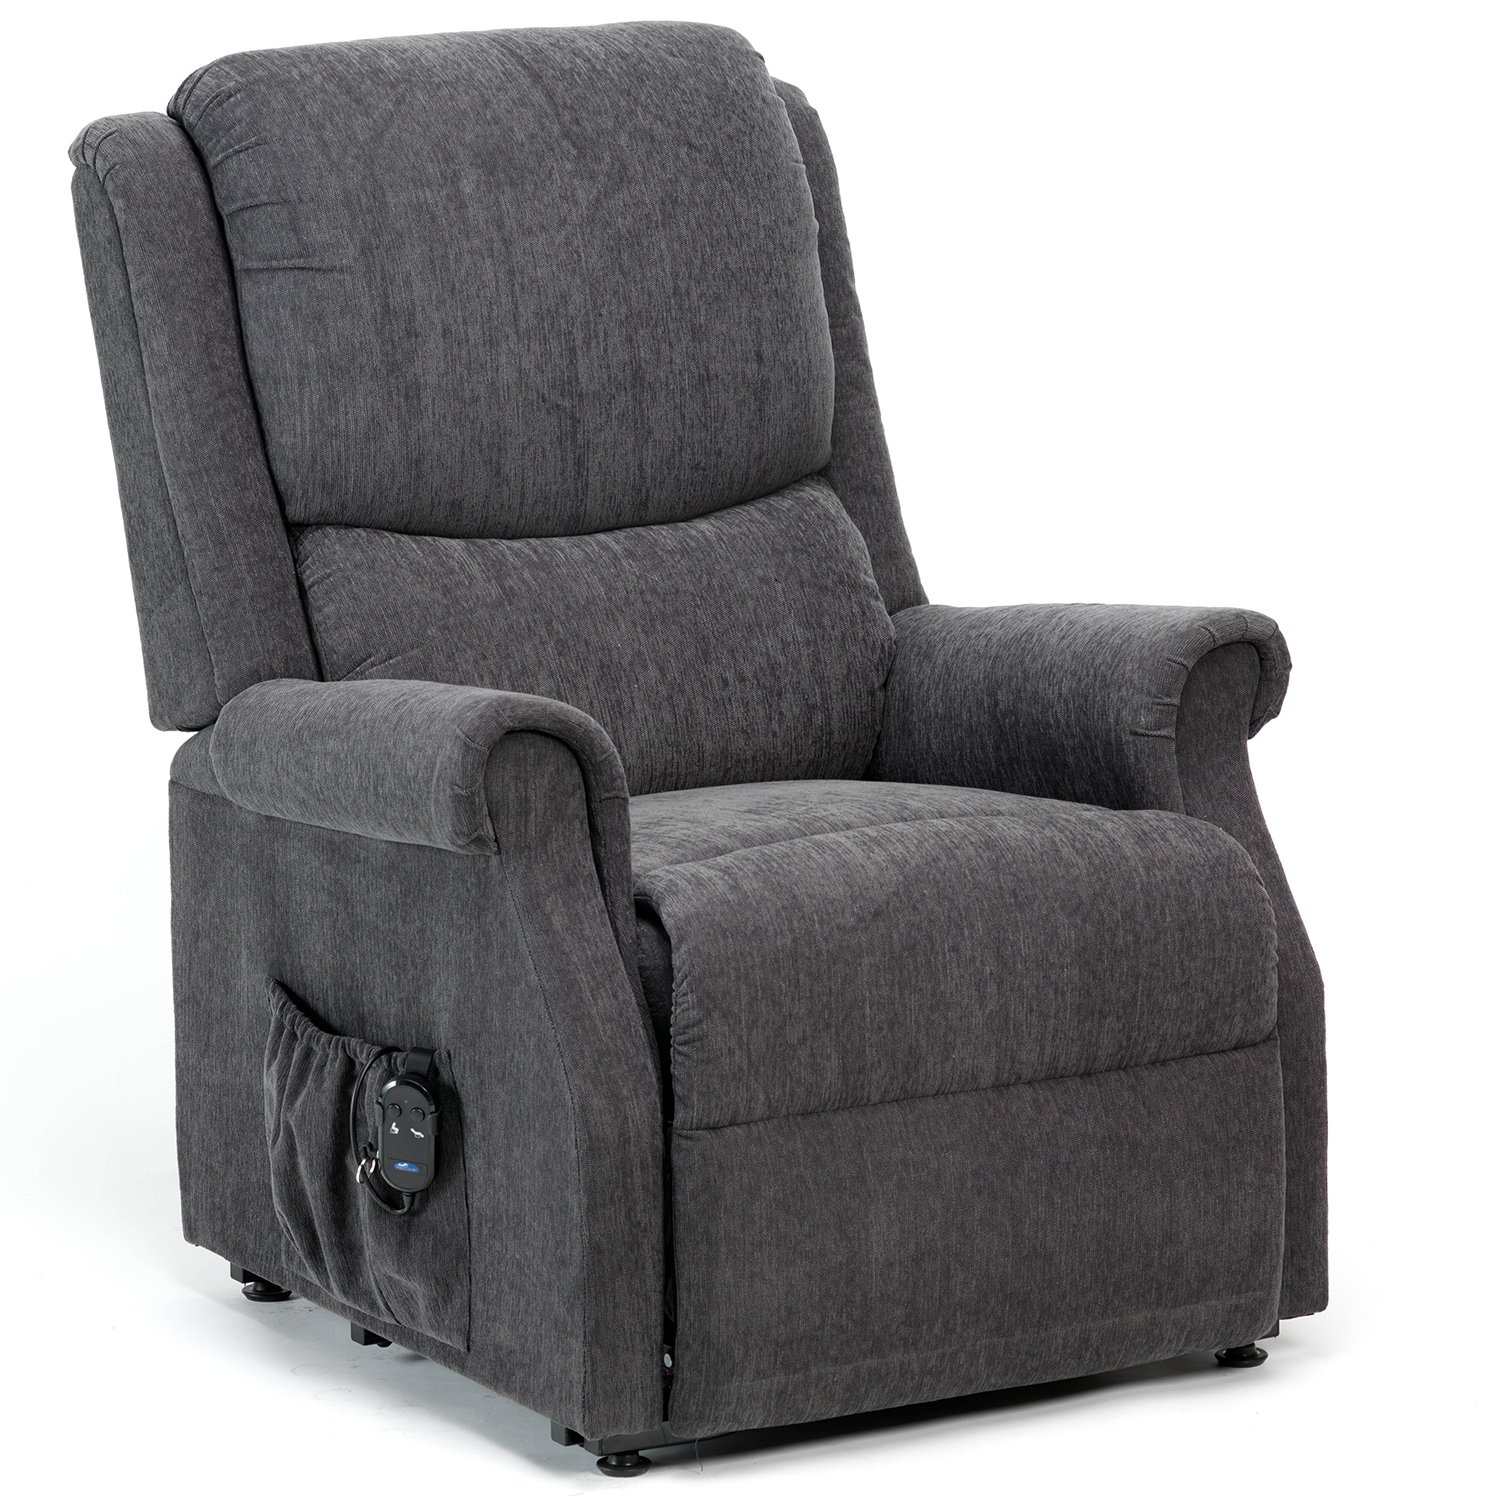 Indiana Single Motor Standard & Petite Riser Recliner Chair – Charcoal